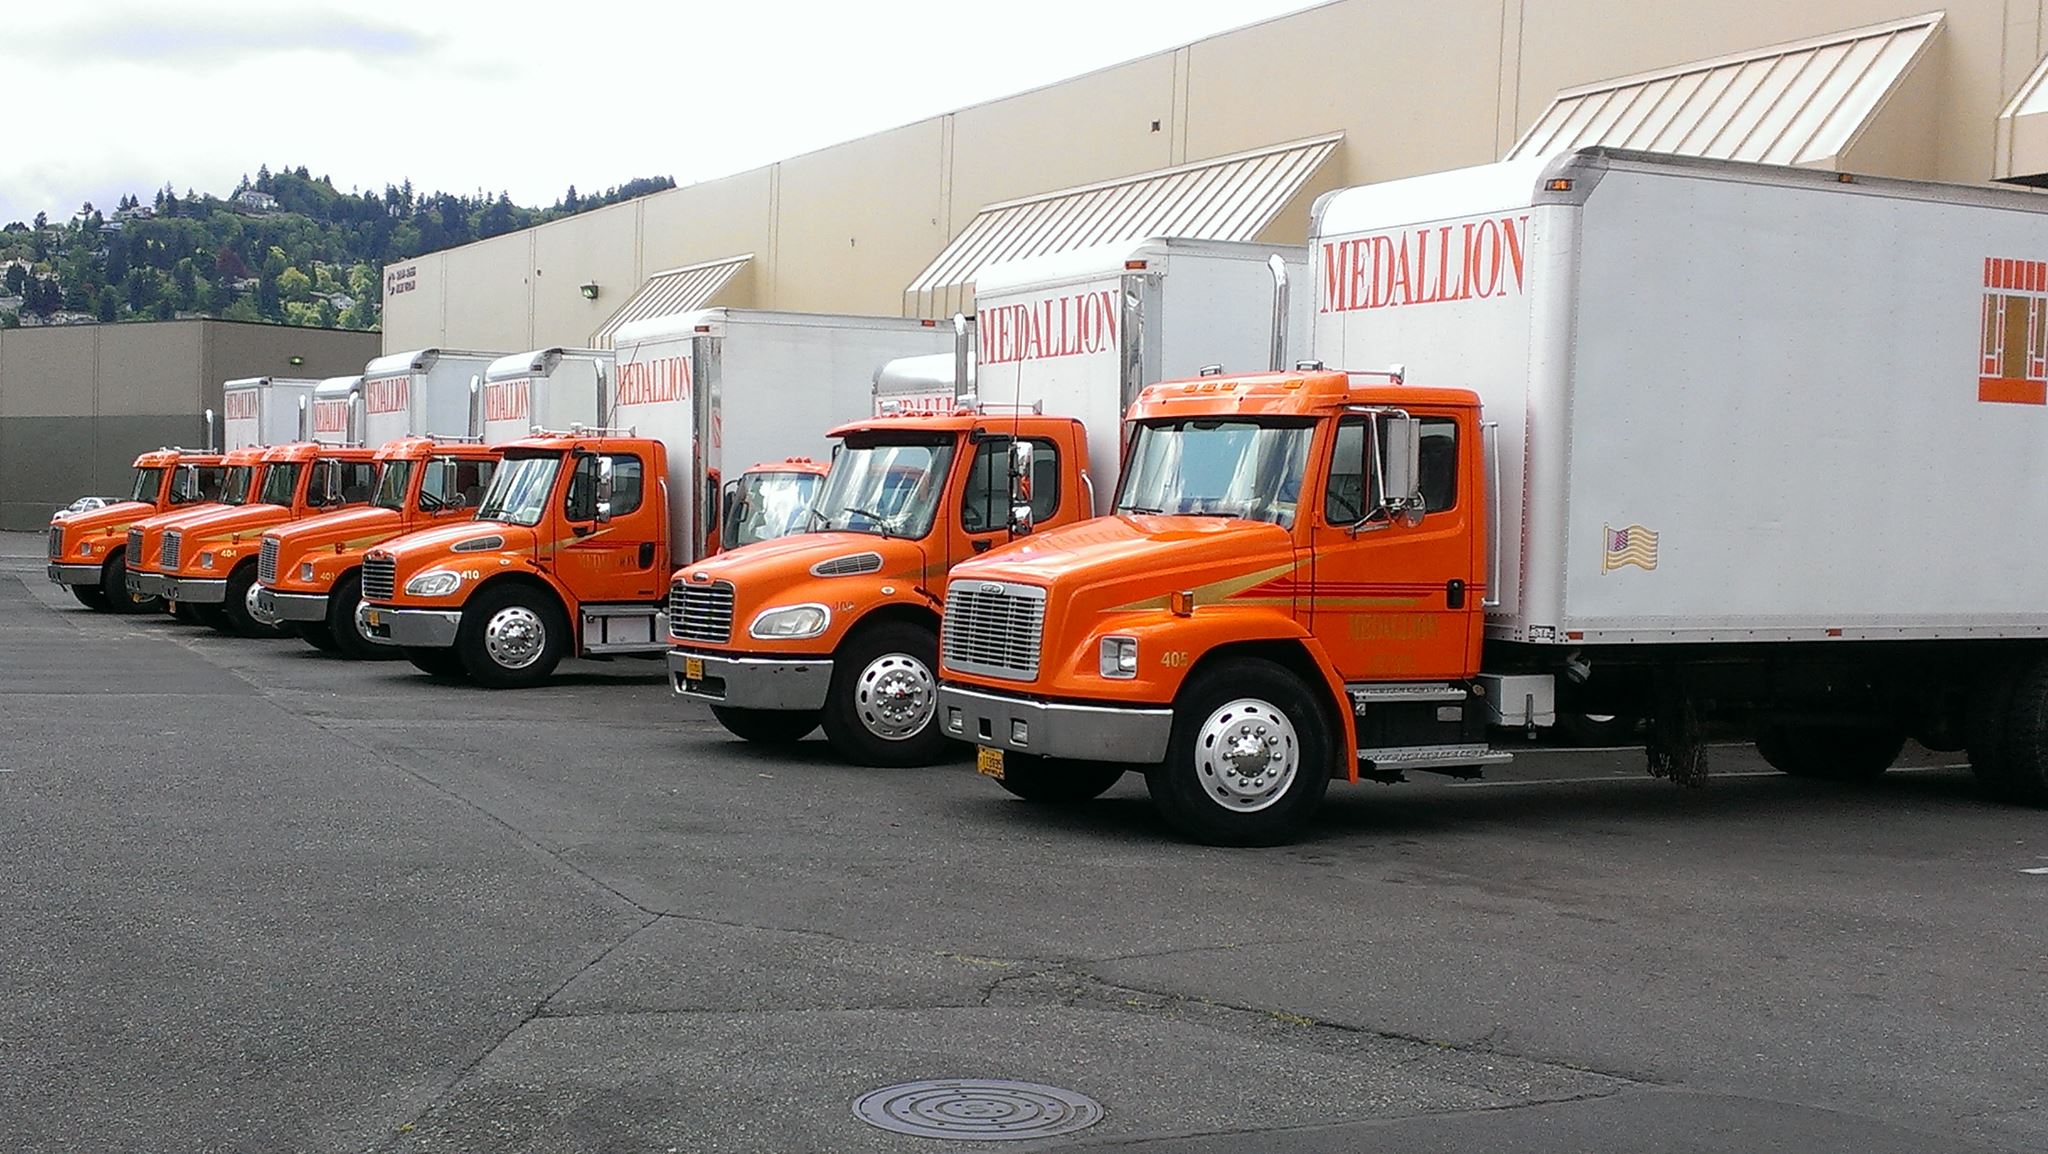 Image of Medallion Industries Portland trucks